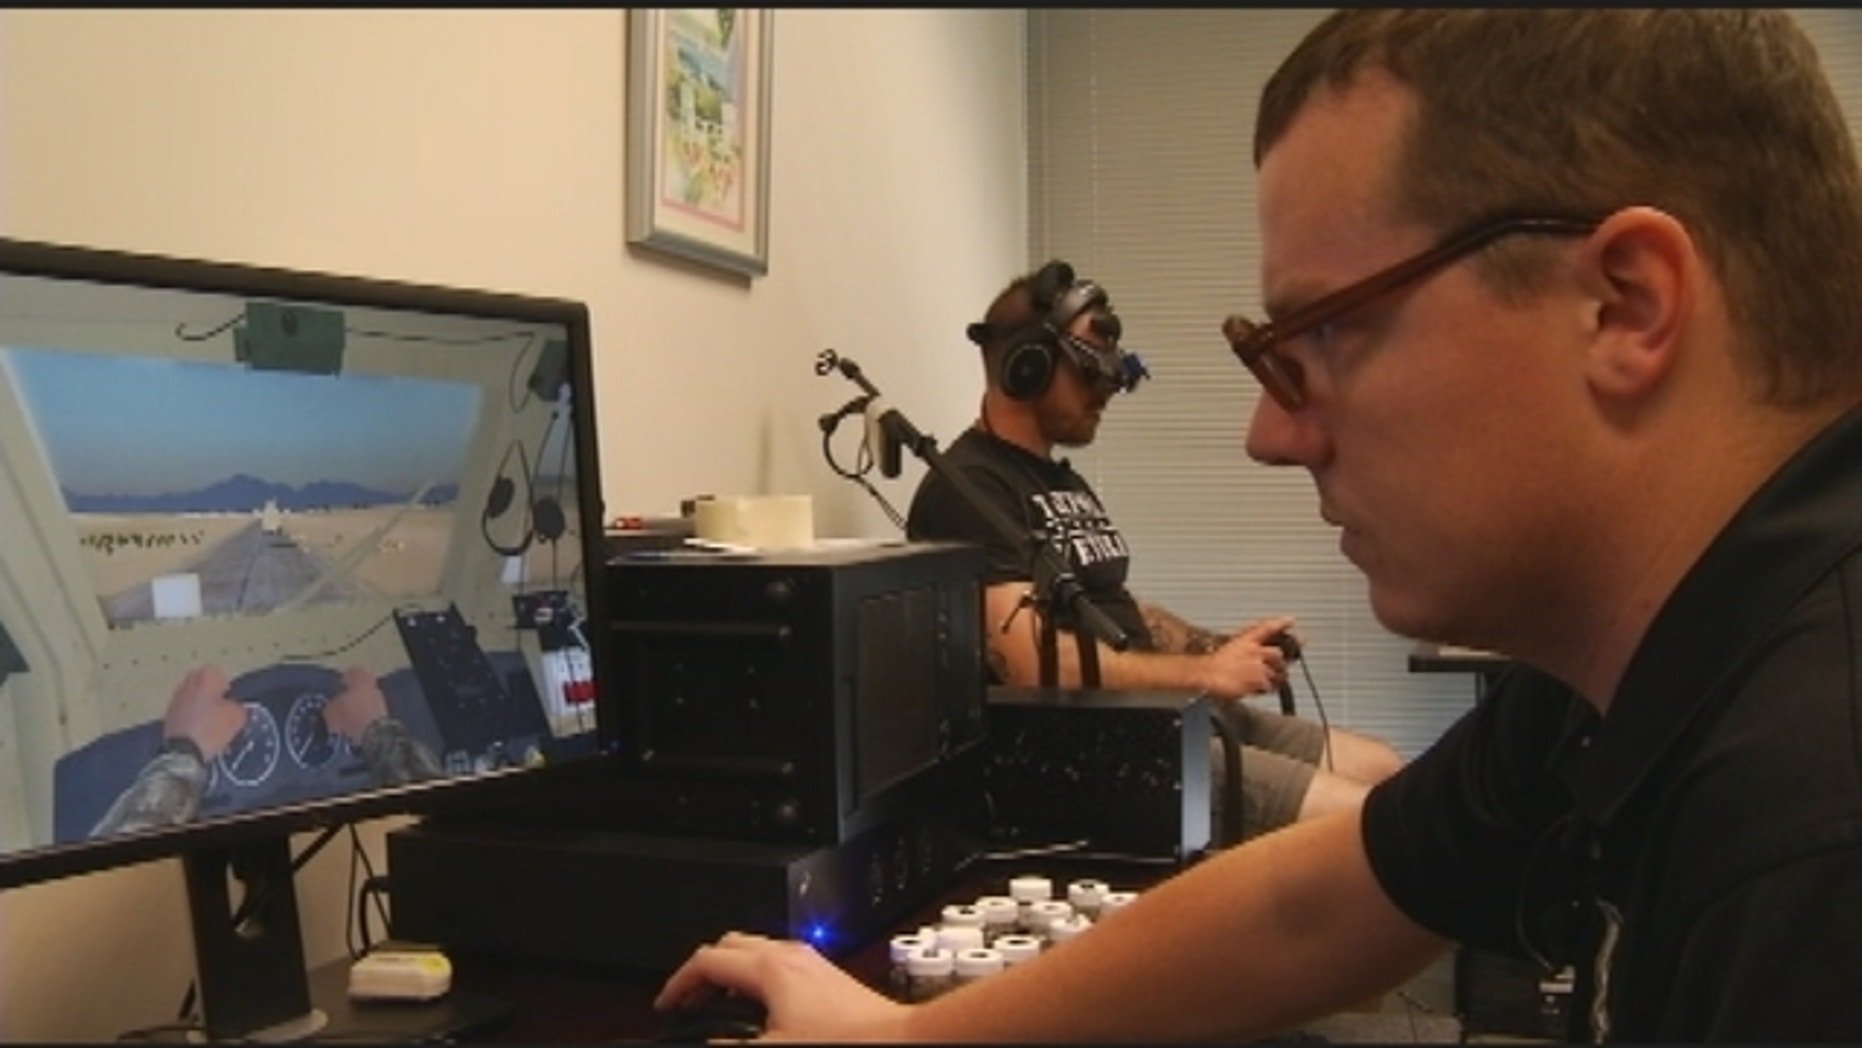 Researchers using virtual reality to help treat PTSD